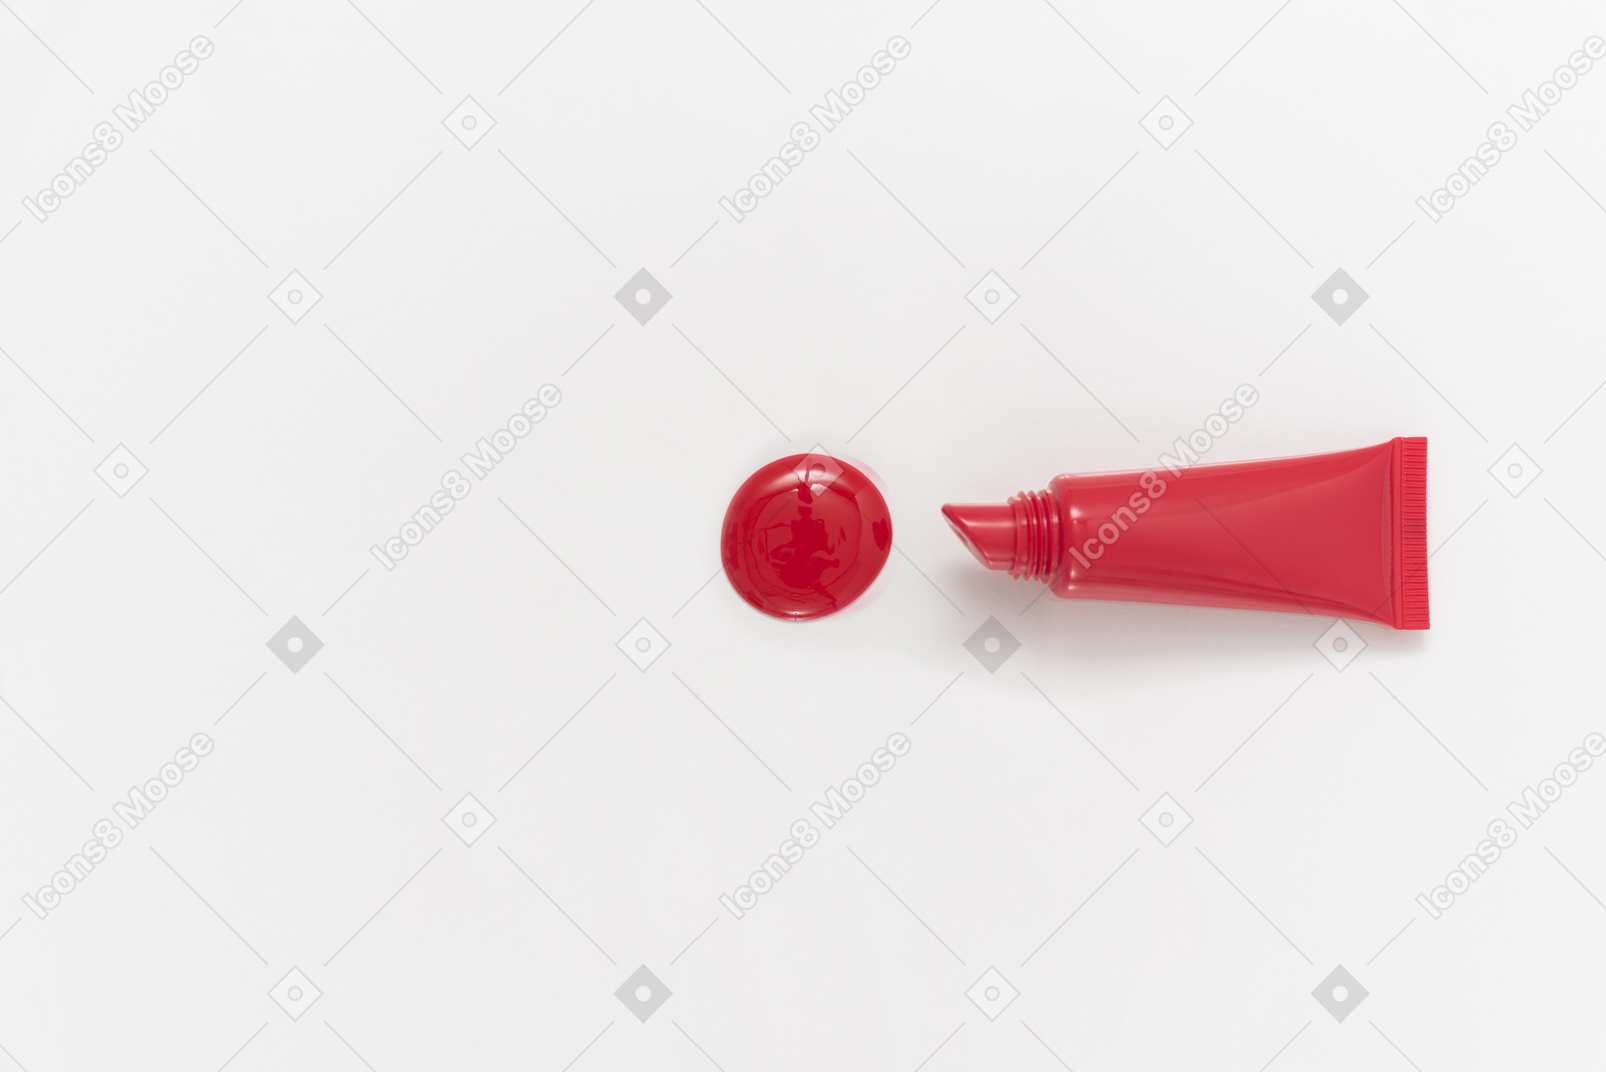 Gota de lápiz labial rojo y botella de lápiz labial sobre fondo blanco.